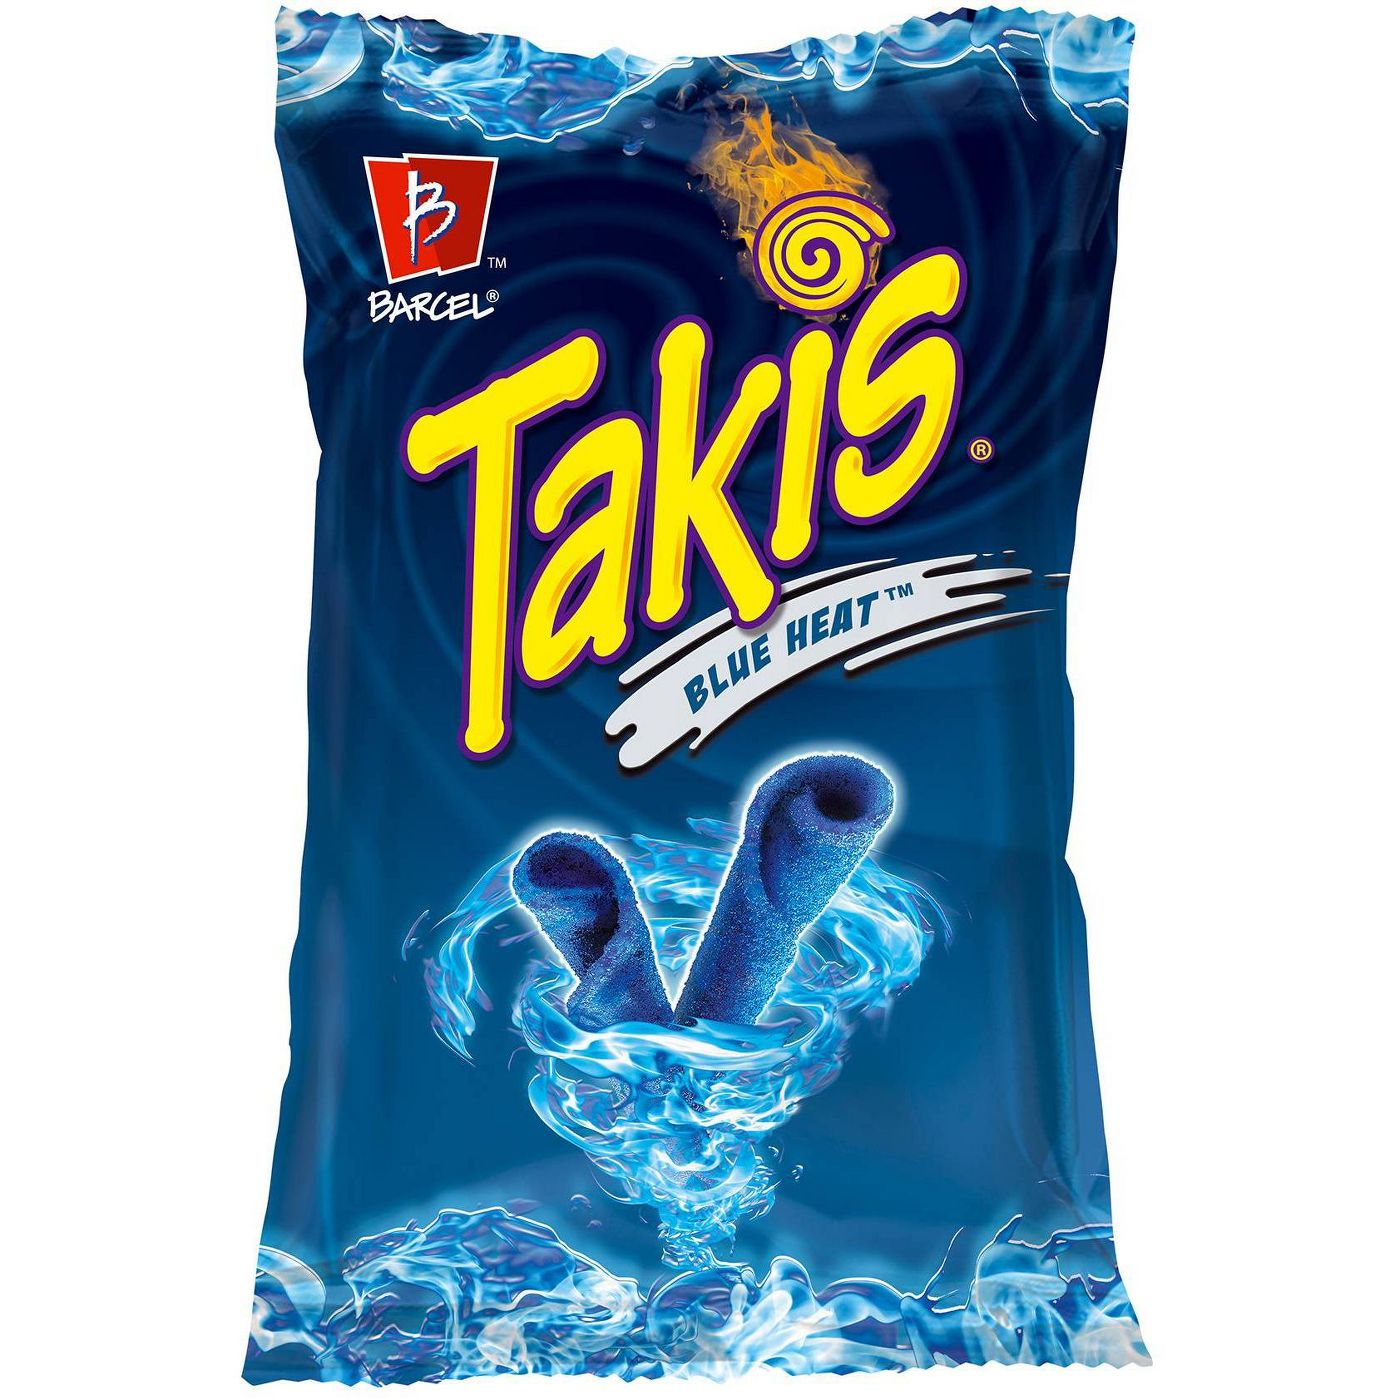 Takis Blue heat 280g Sharebag by treatshack.co.uk